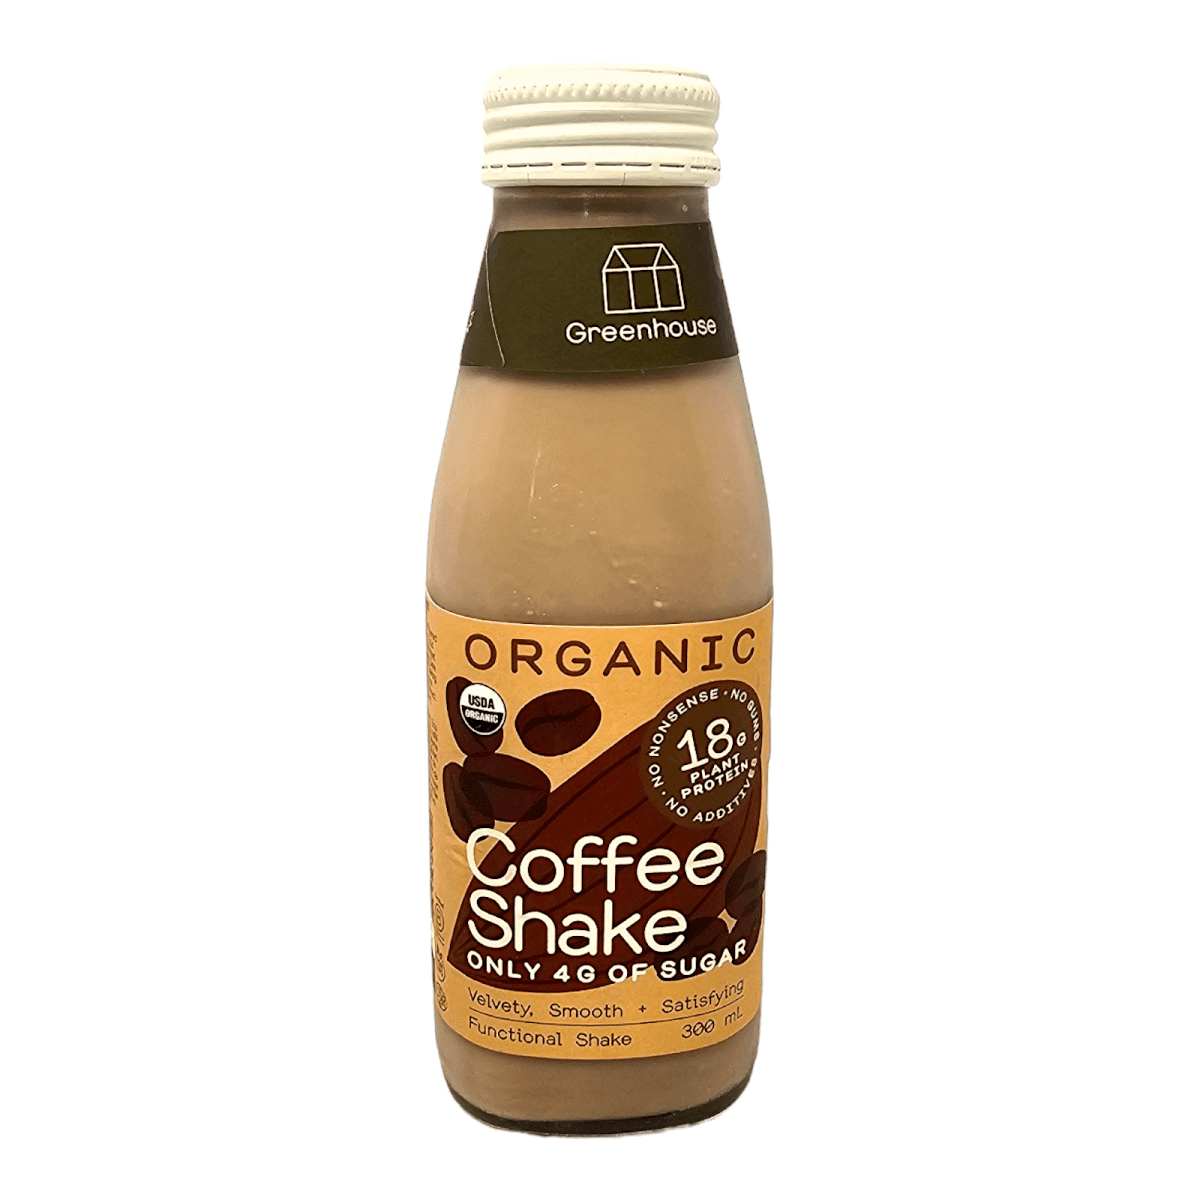 Greenhouse Organic Coffee Shake 18g of Protein (300ml)